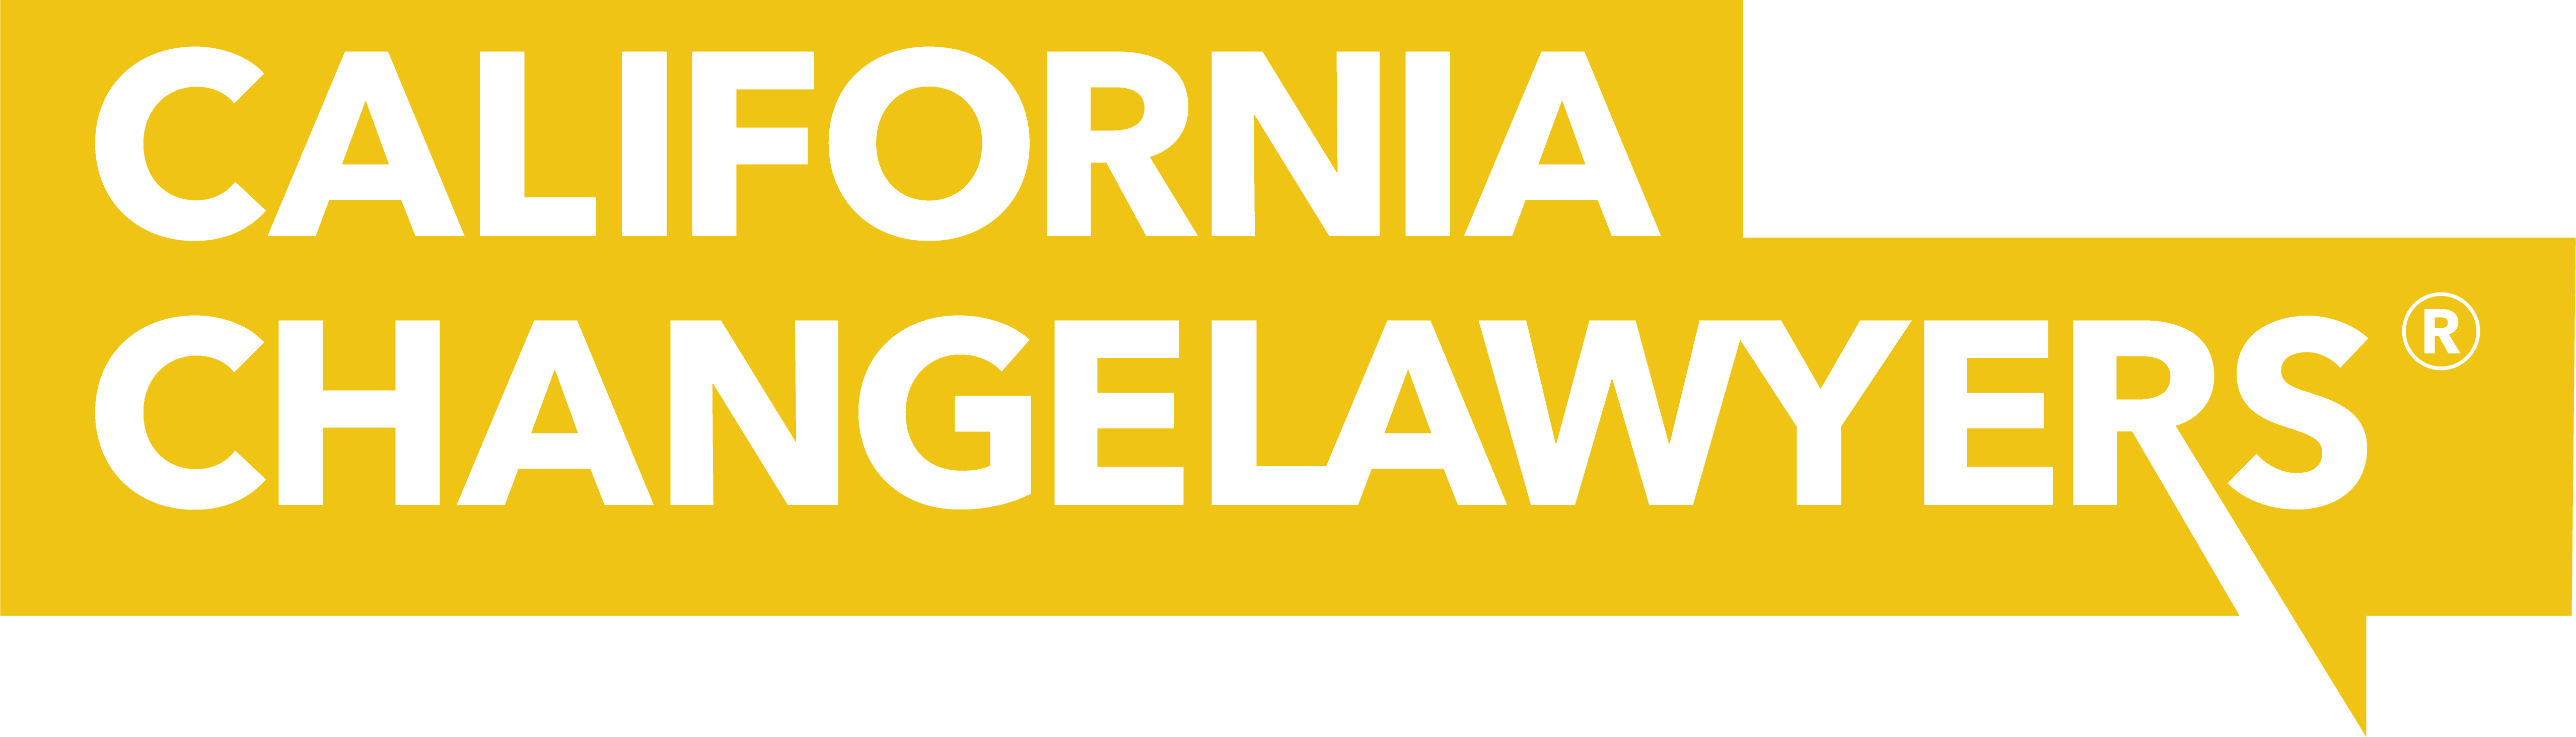 ChangeLawyers Registered Logo